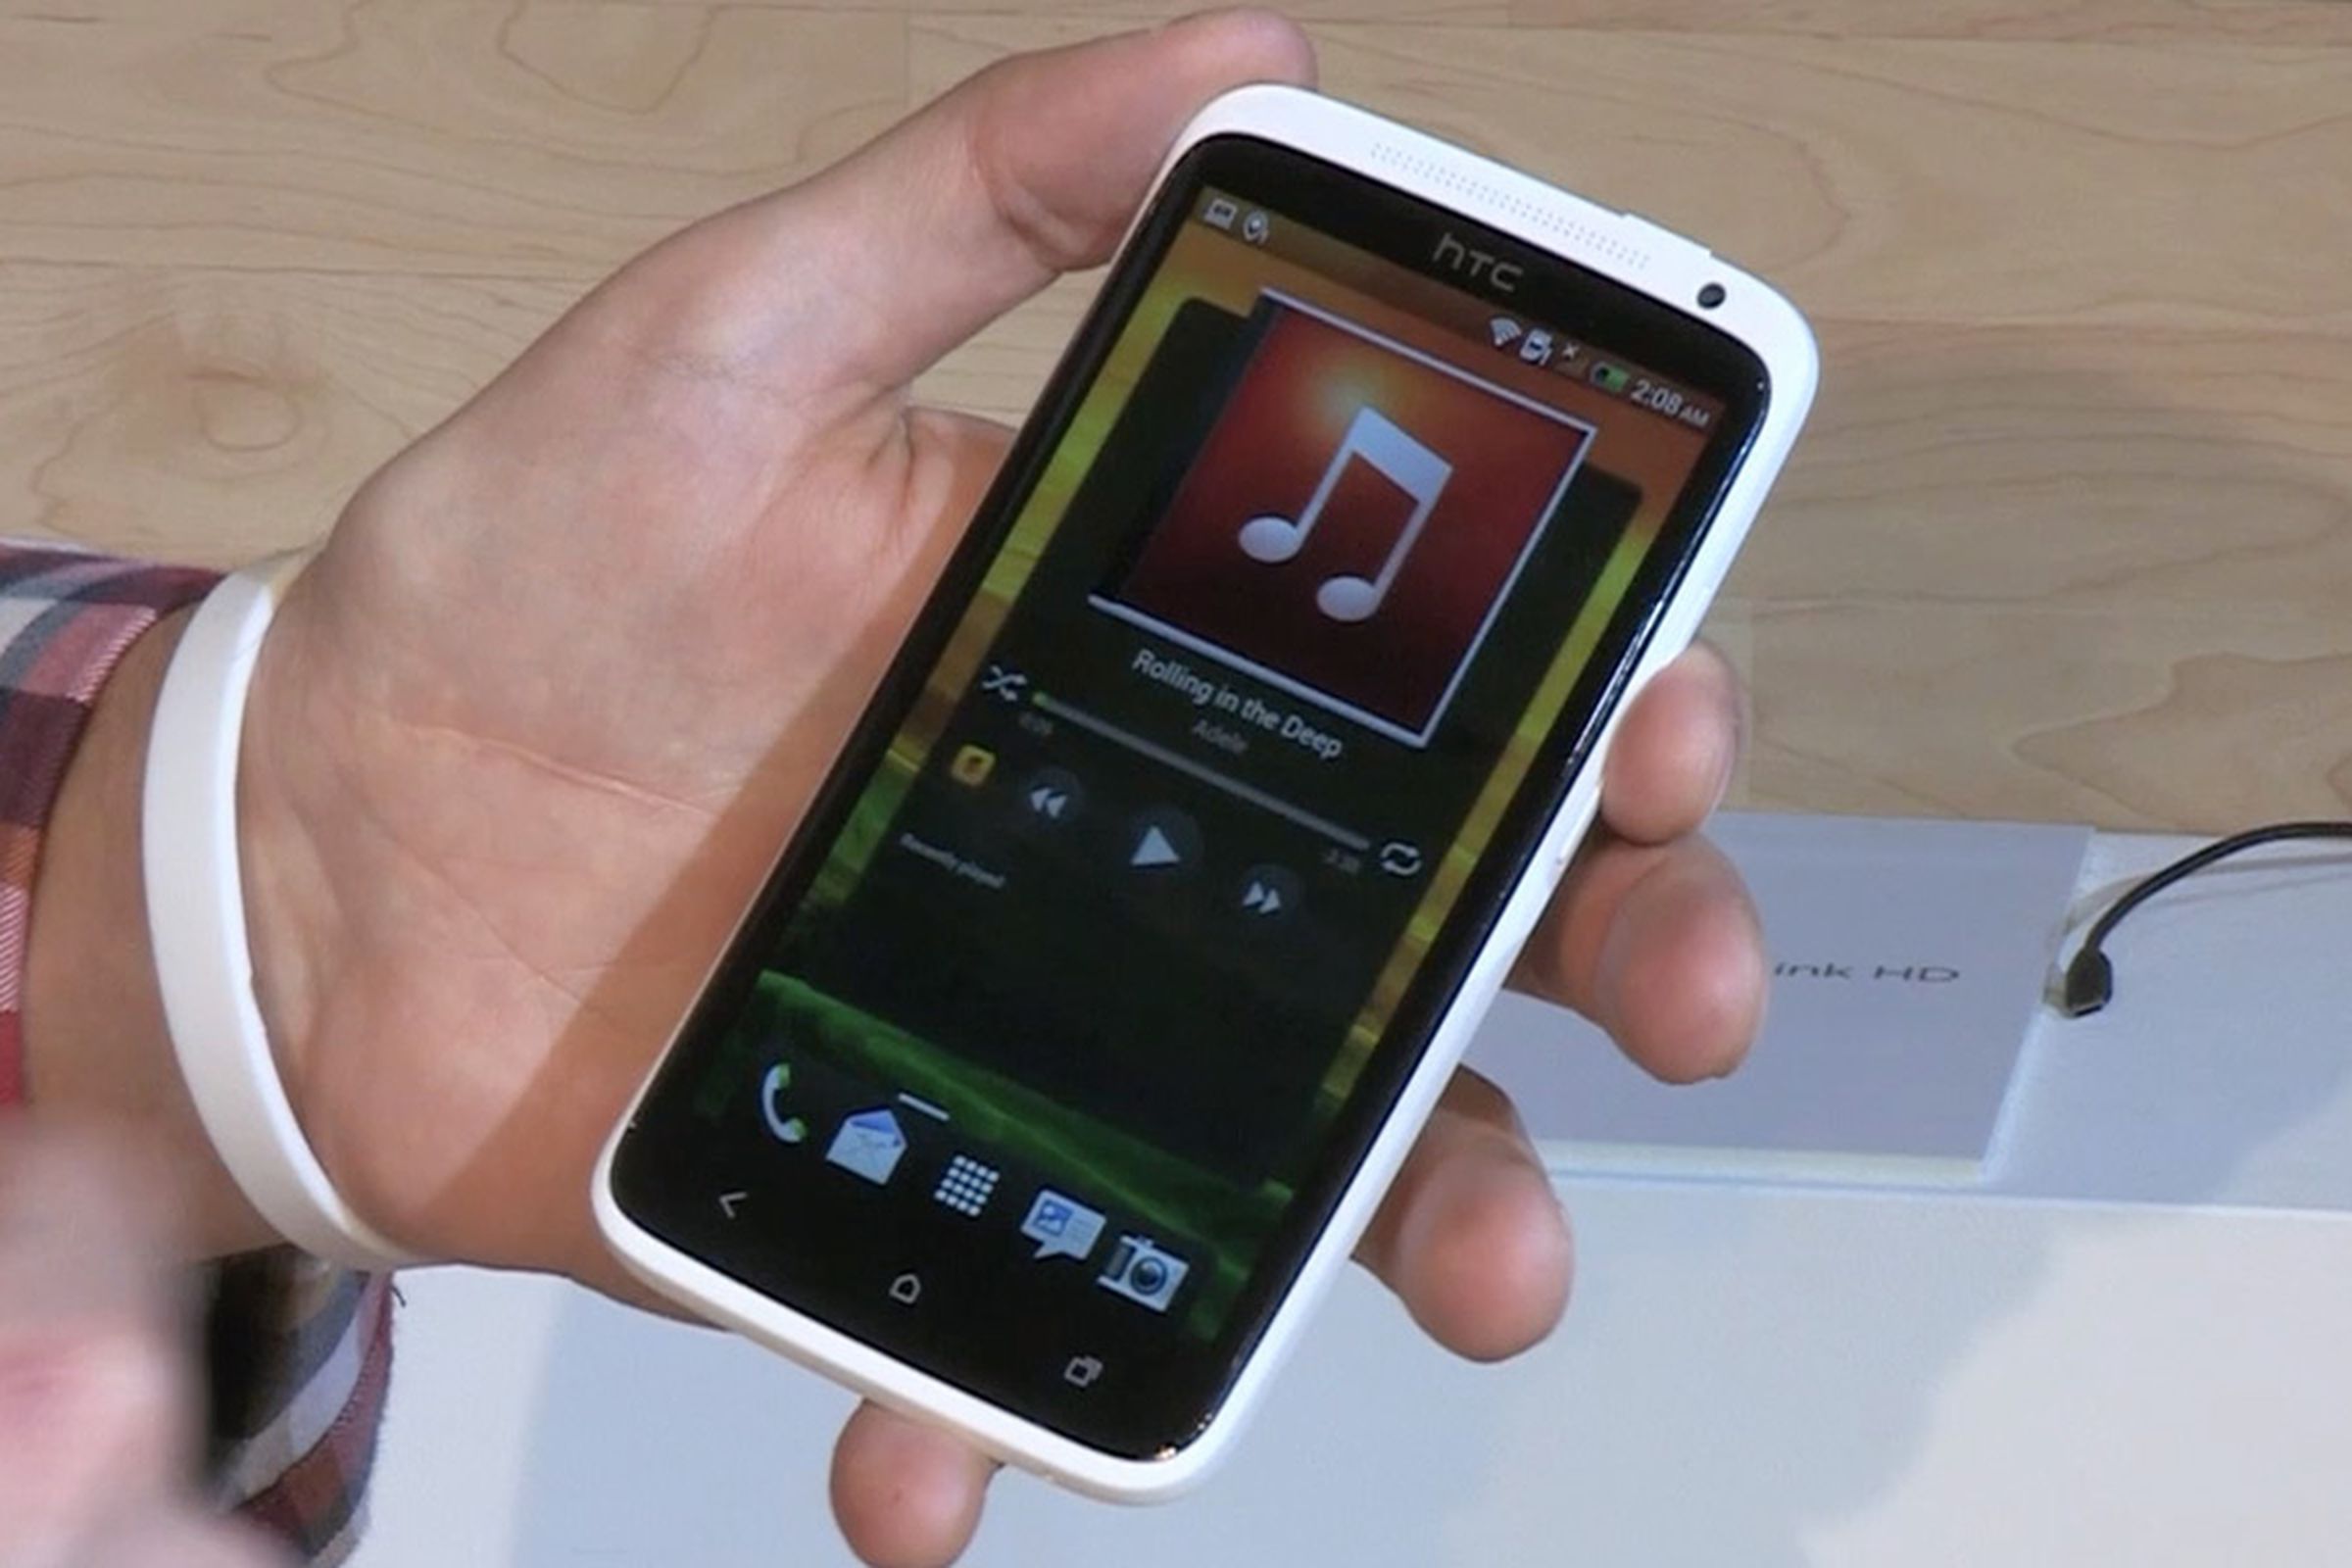 HTC One X video